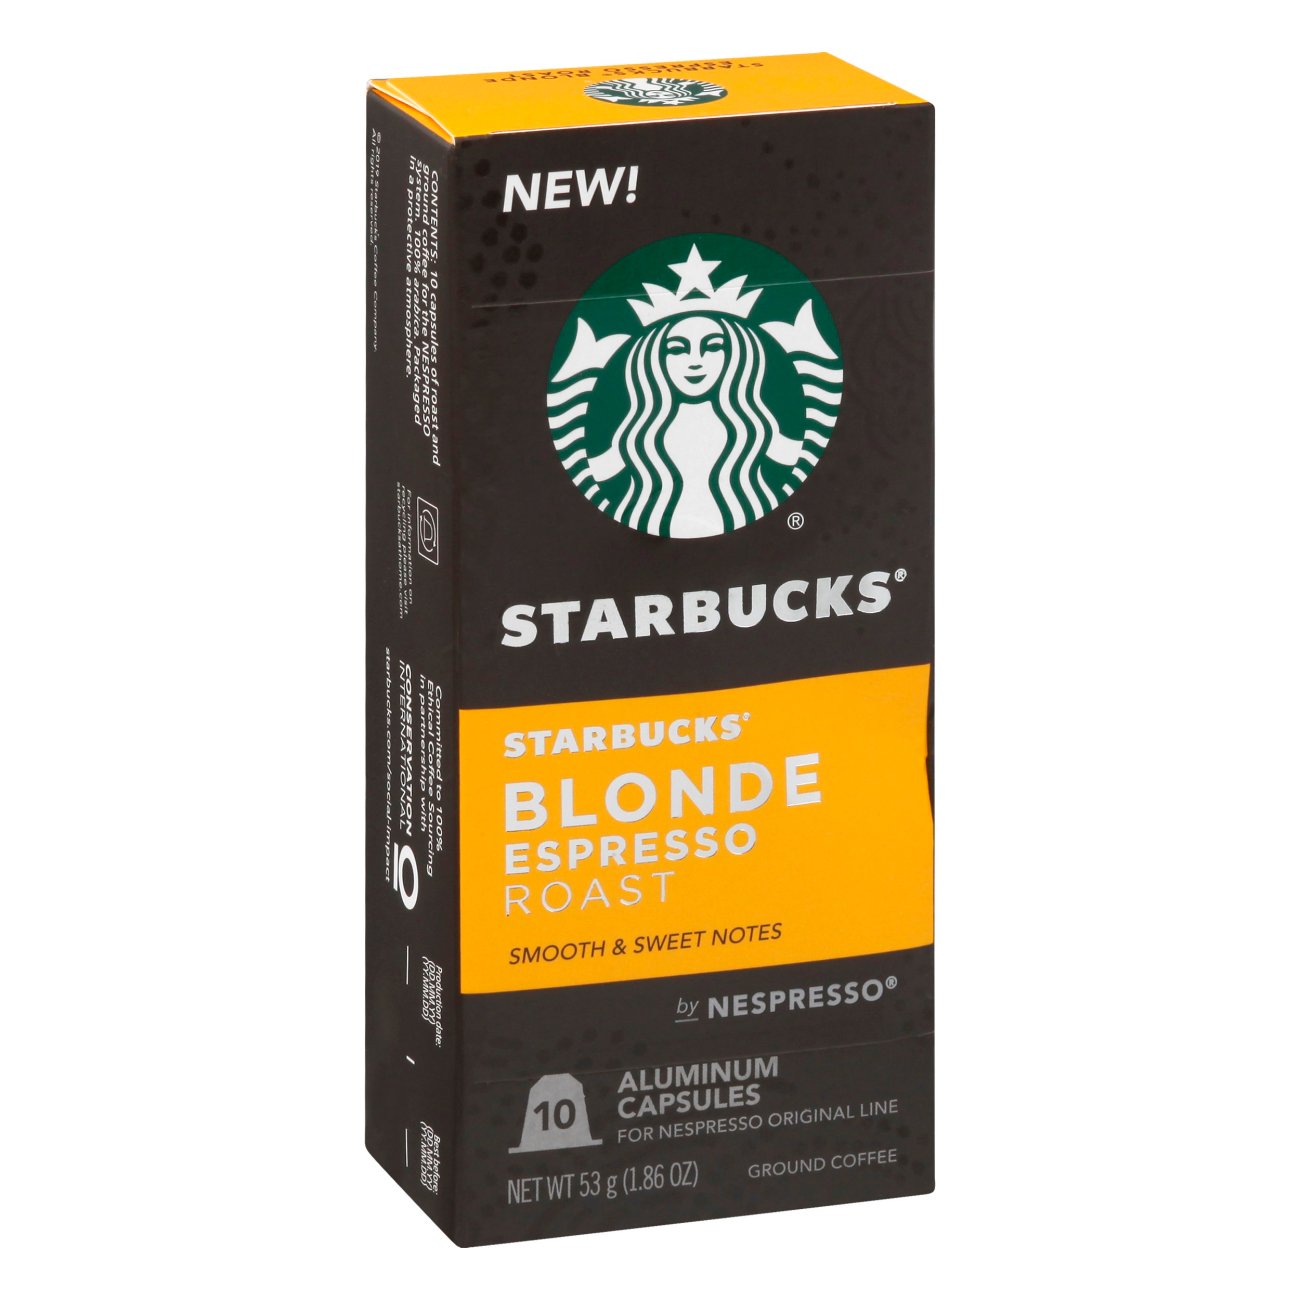 Starbucks Blonde Espresso Roast Nespresso Capsules - Shop Coffee at H-E-B